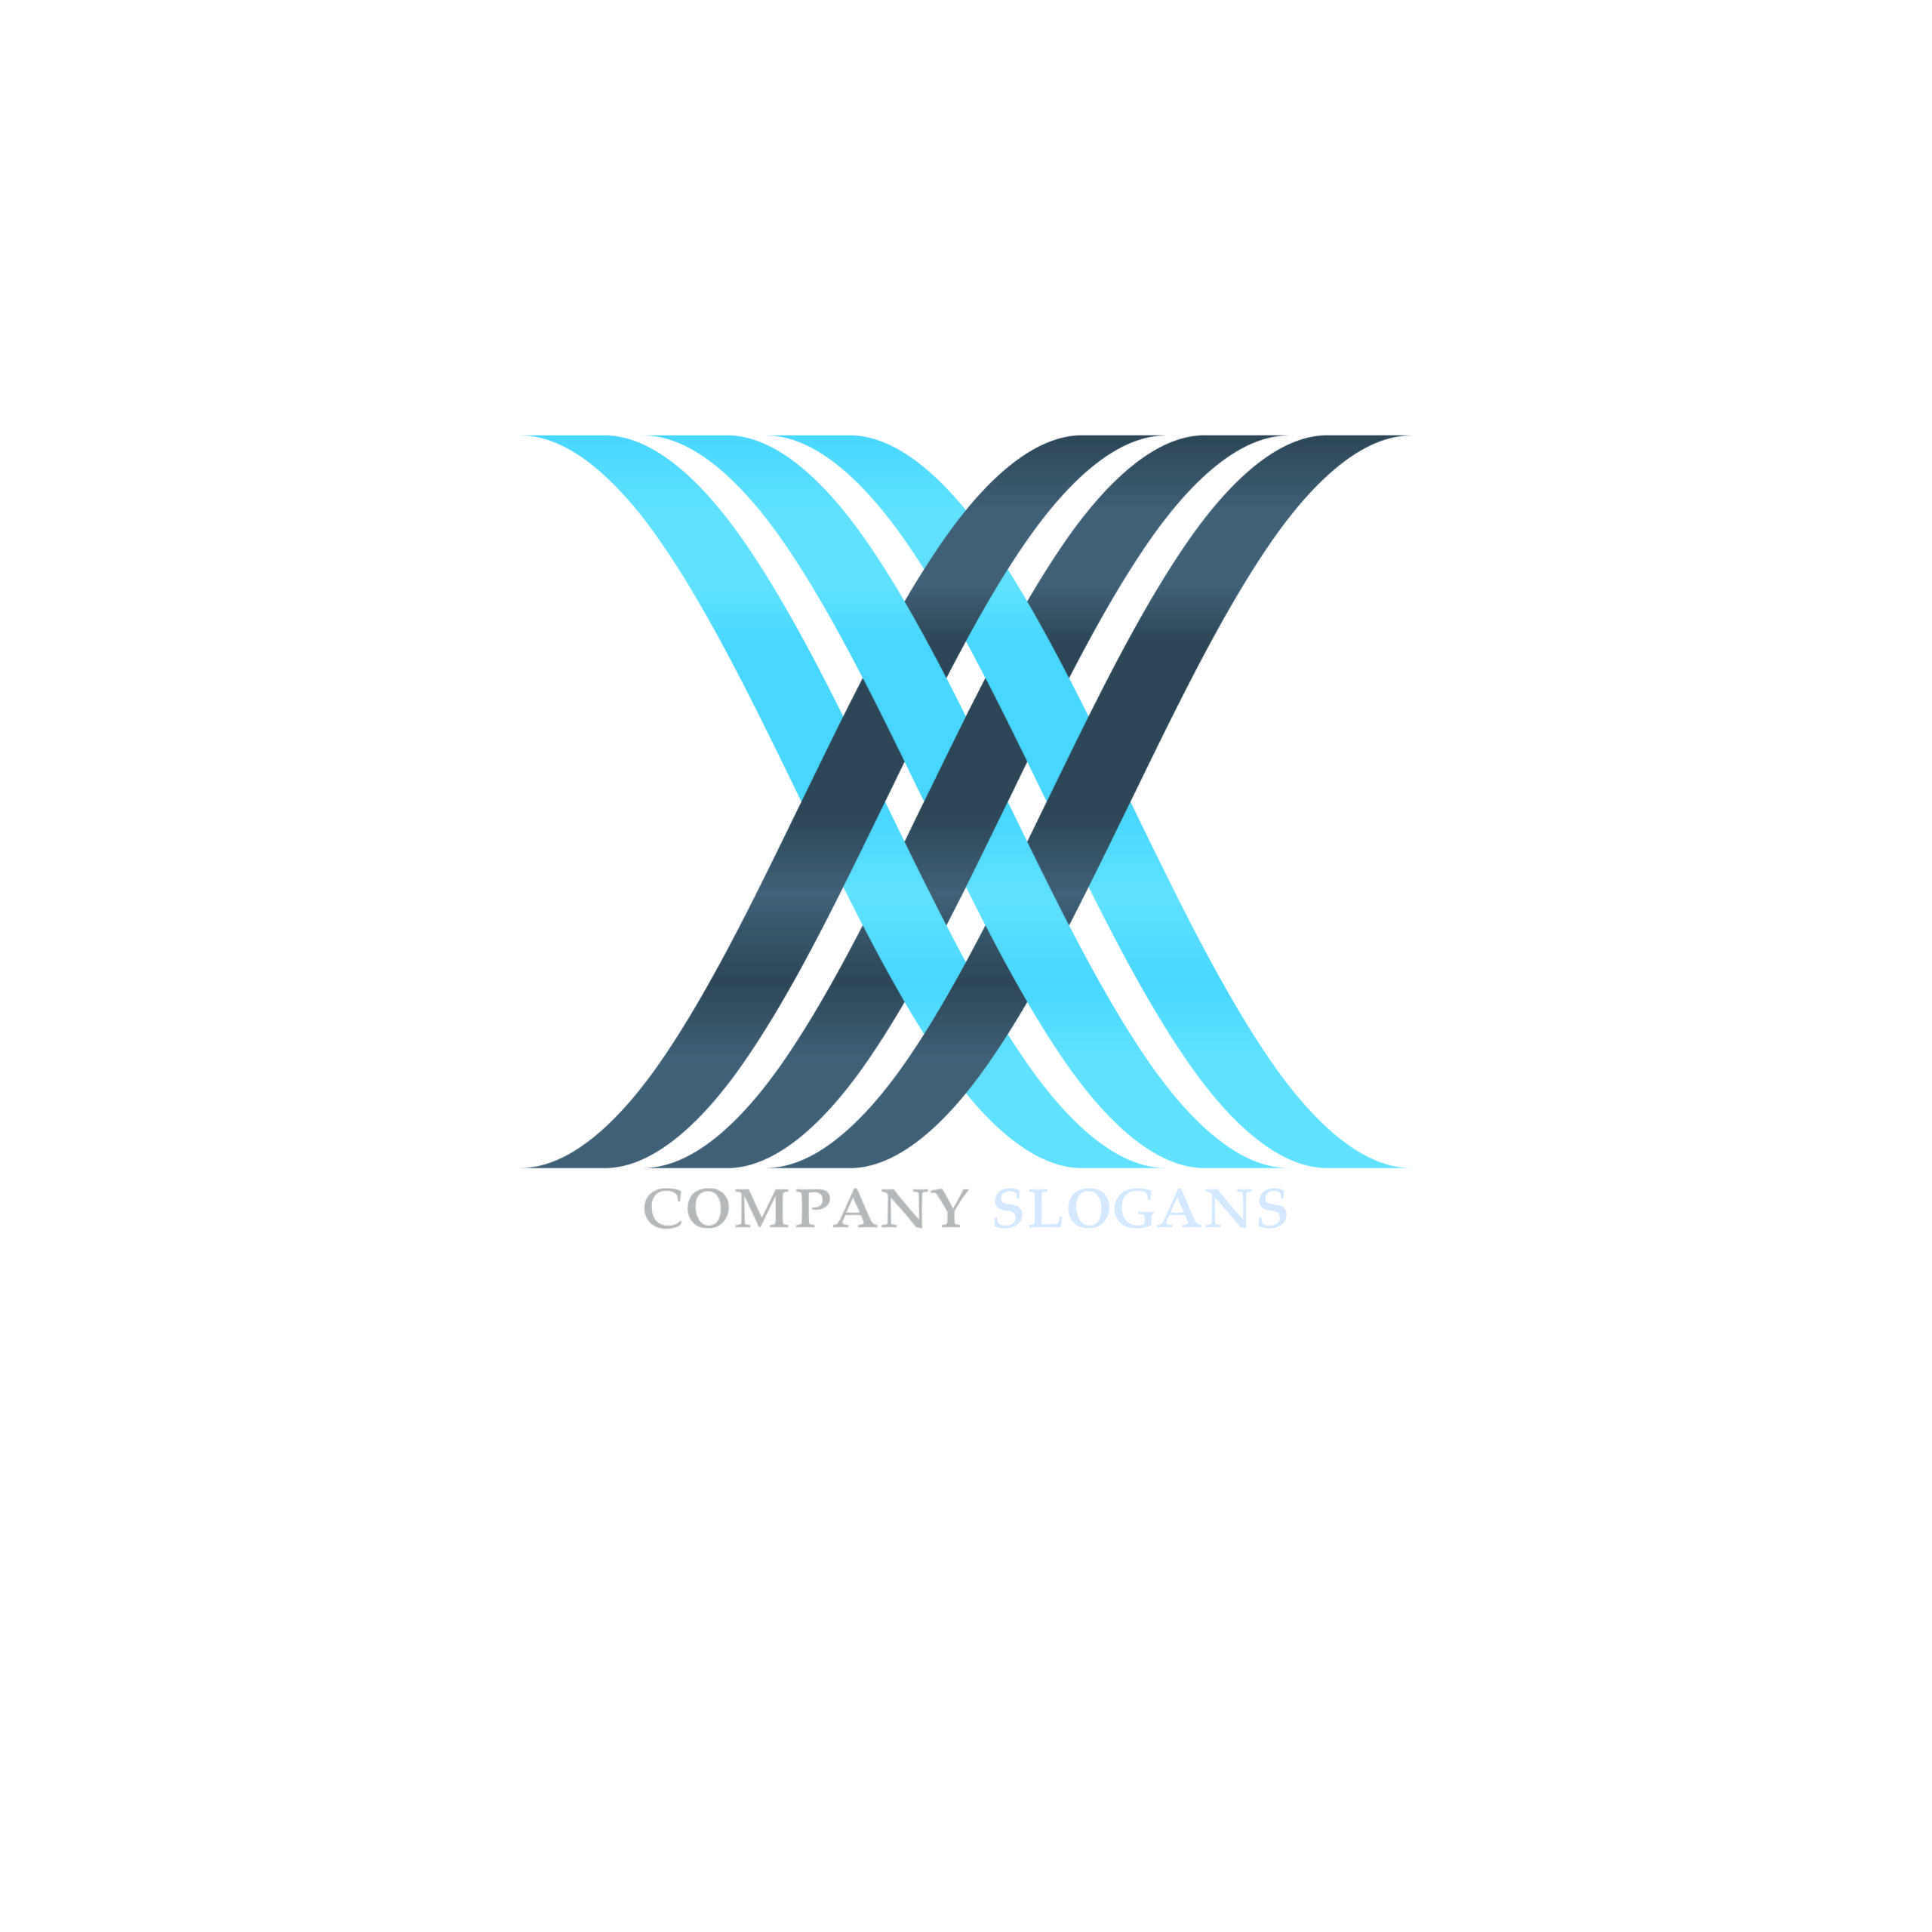 3x abstract logo